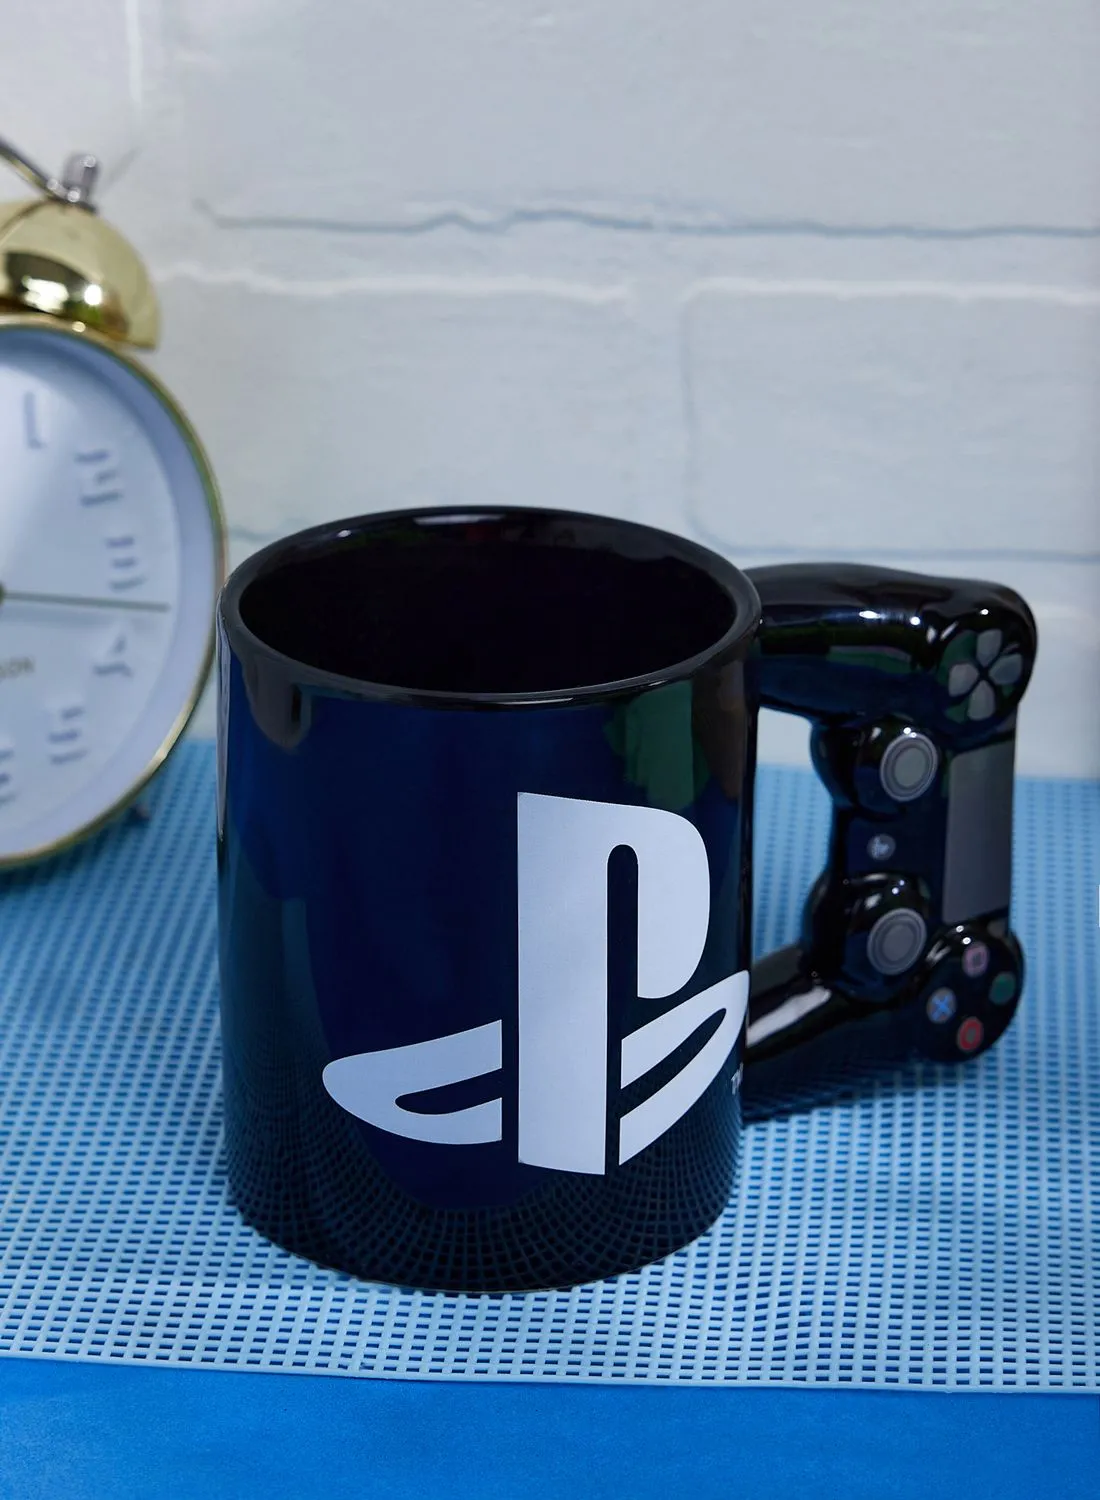 Paladone Playstation Ds4 Controller Mug